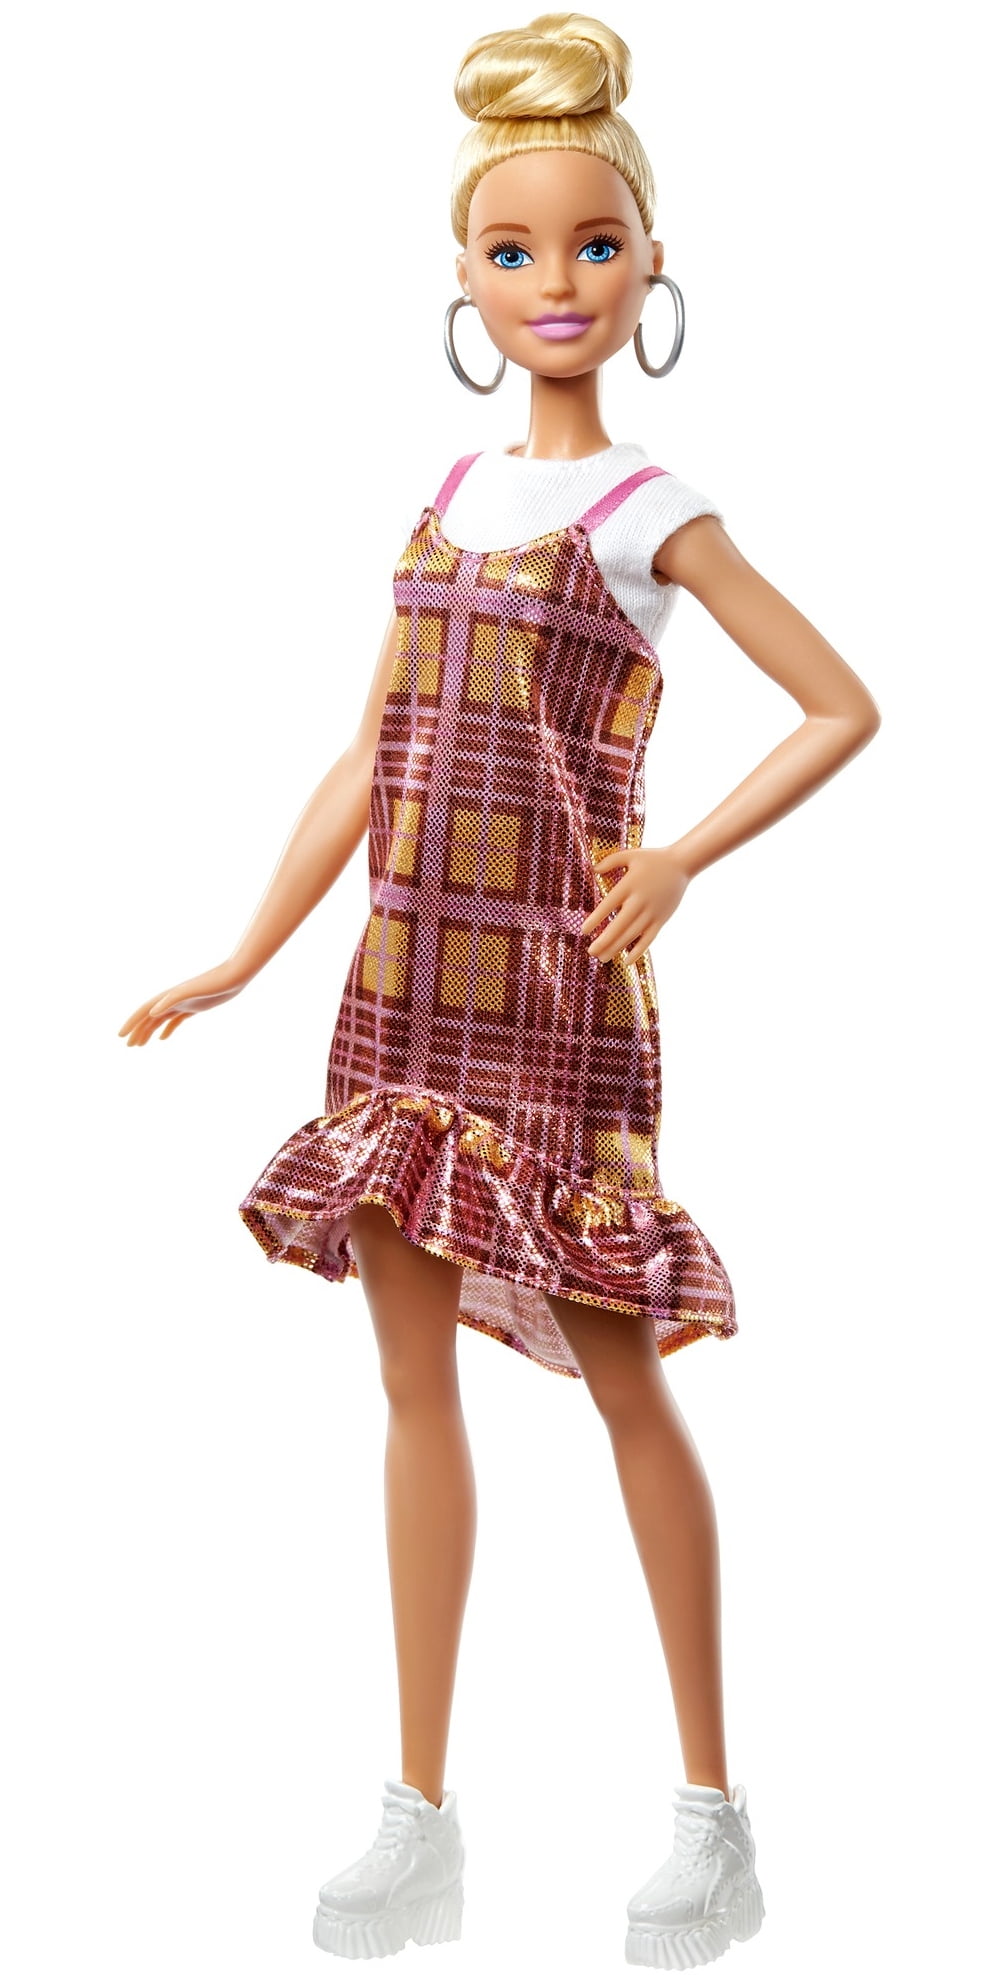 Fashionistas #141 Red Hair Tie Dye Fringe Dress Barbie Doll Mattel Ghw55 NRFB for sale online 